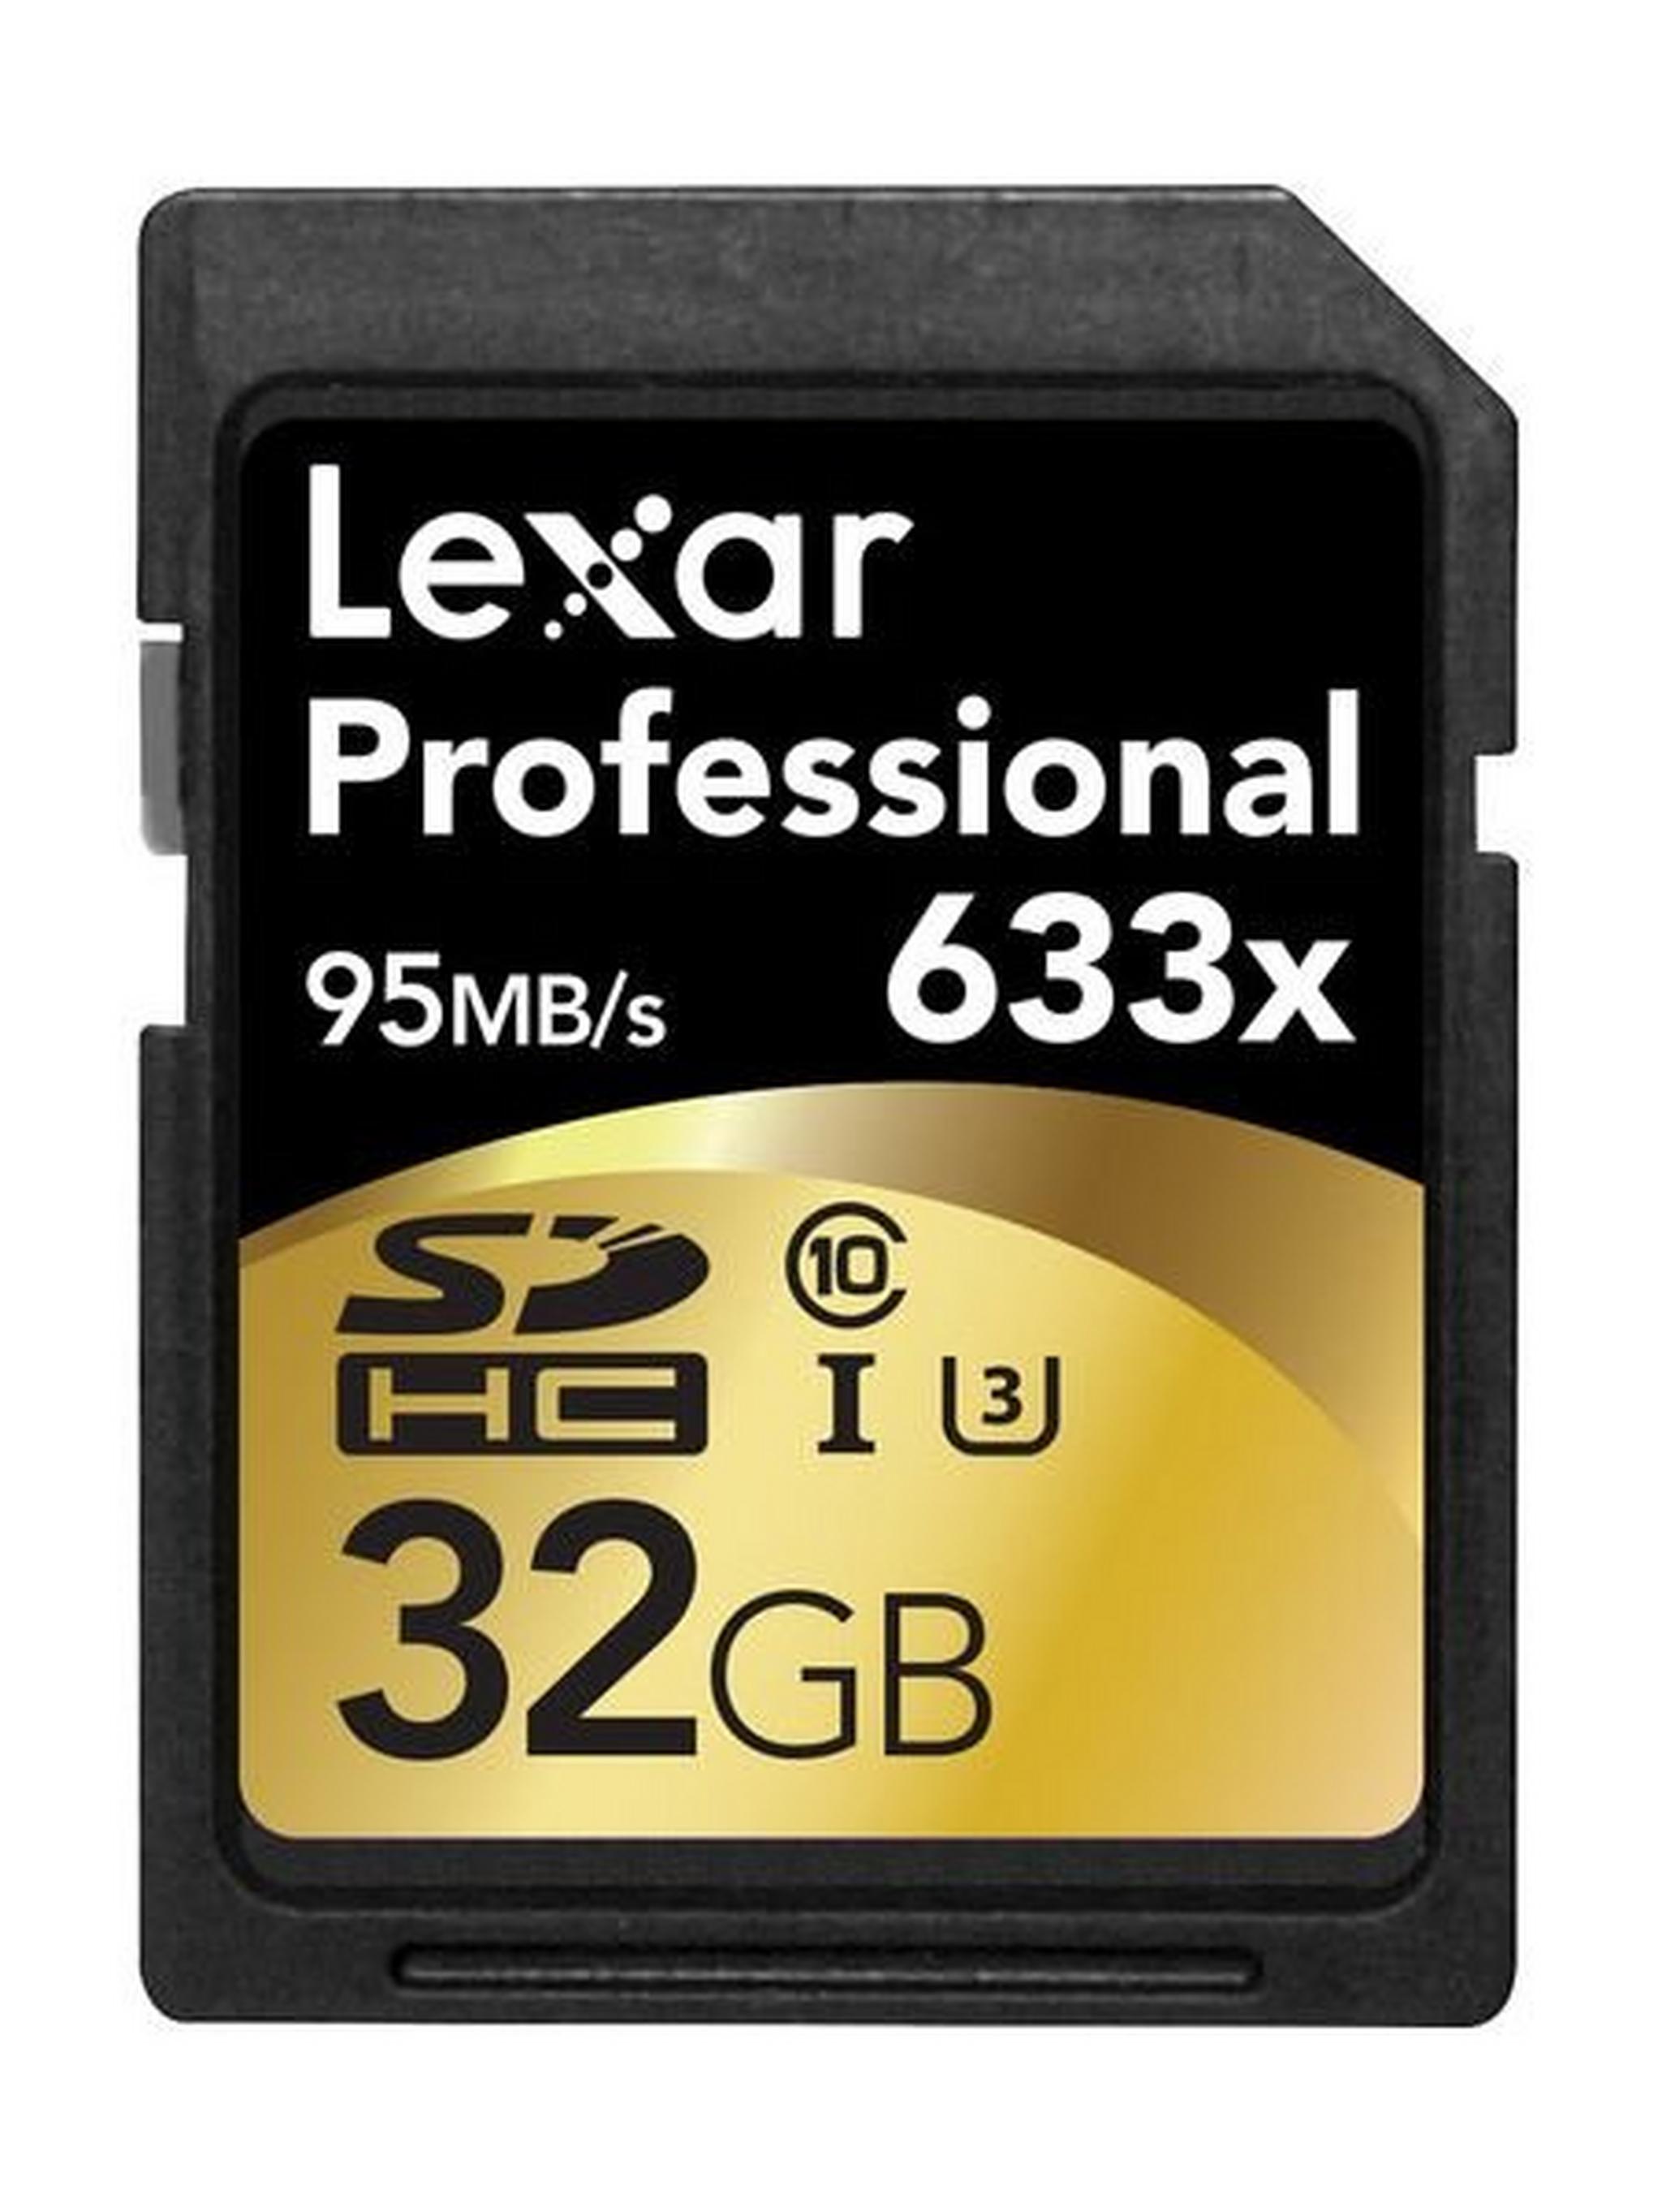 Lexar LSD32GCBEU633 Pro 32GB 633X SDHC Class 10 Memory Card